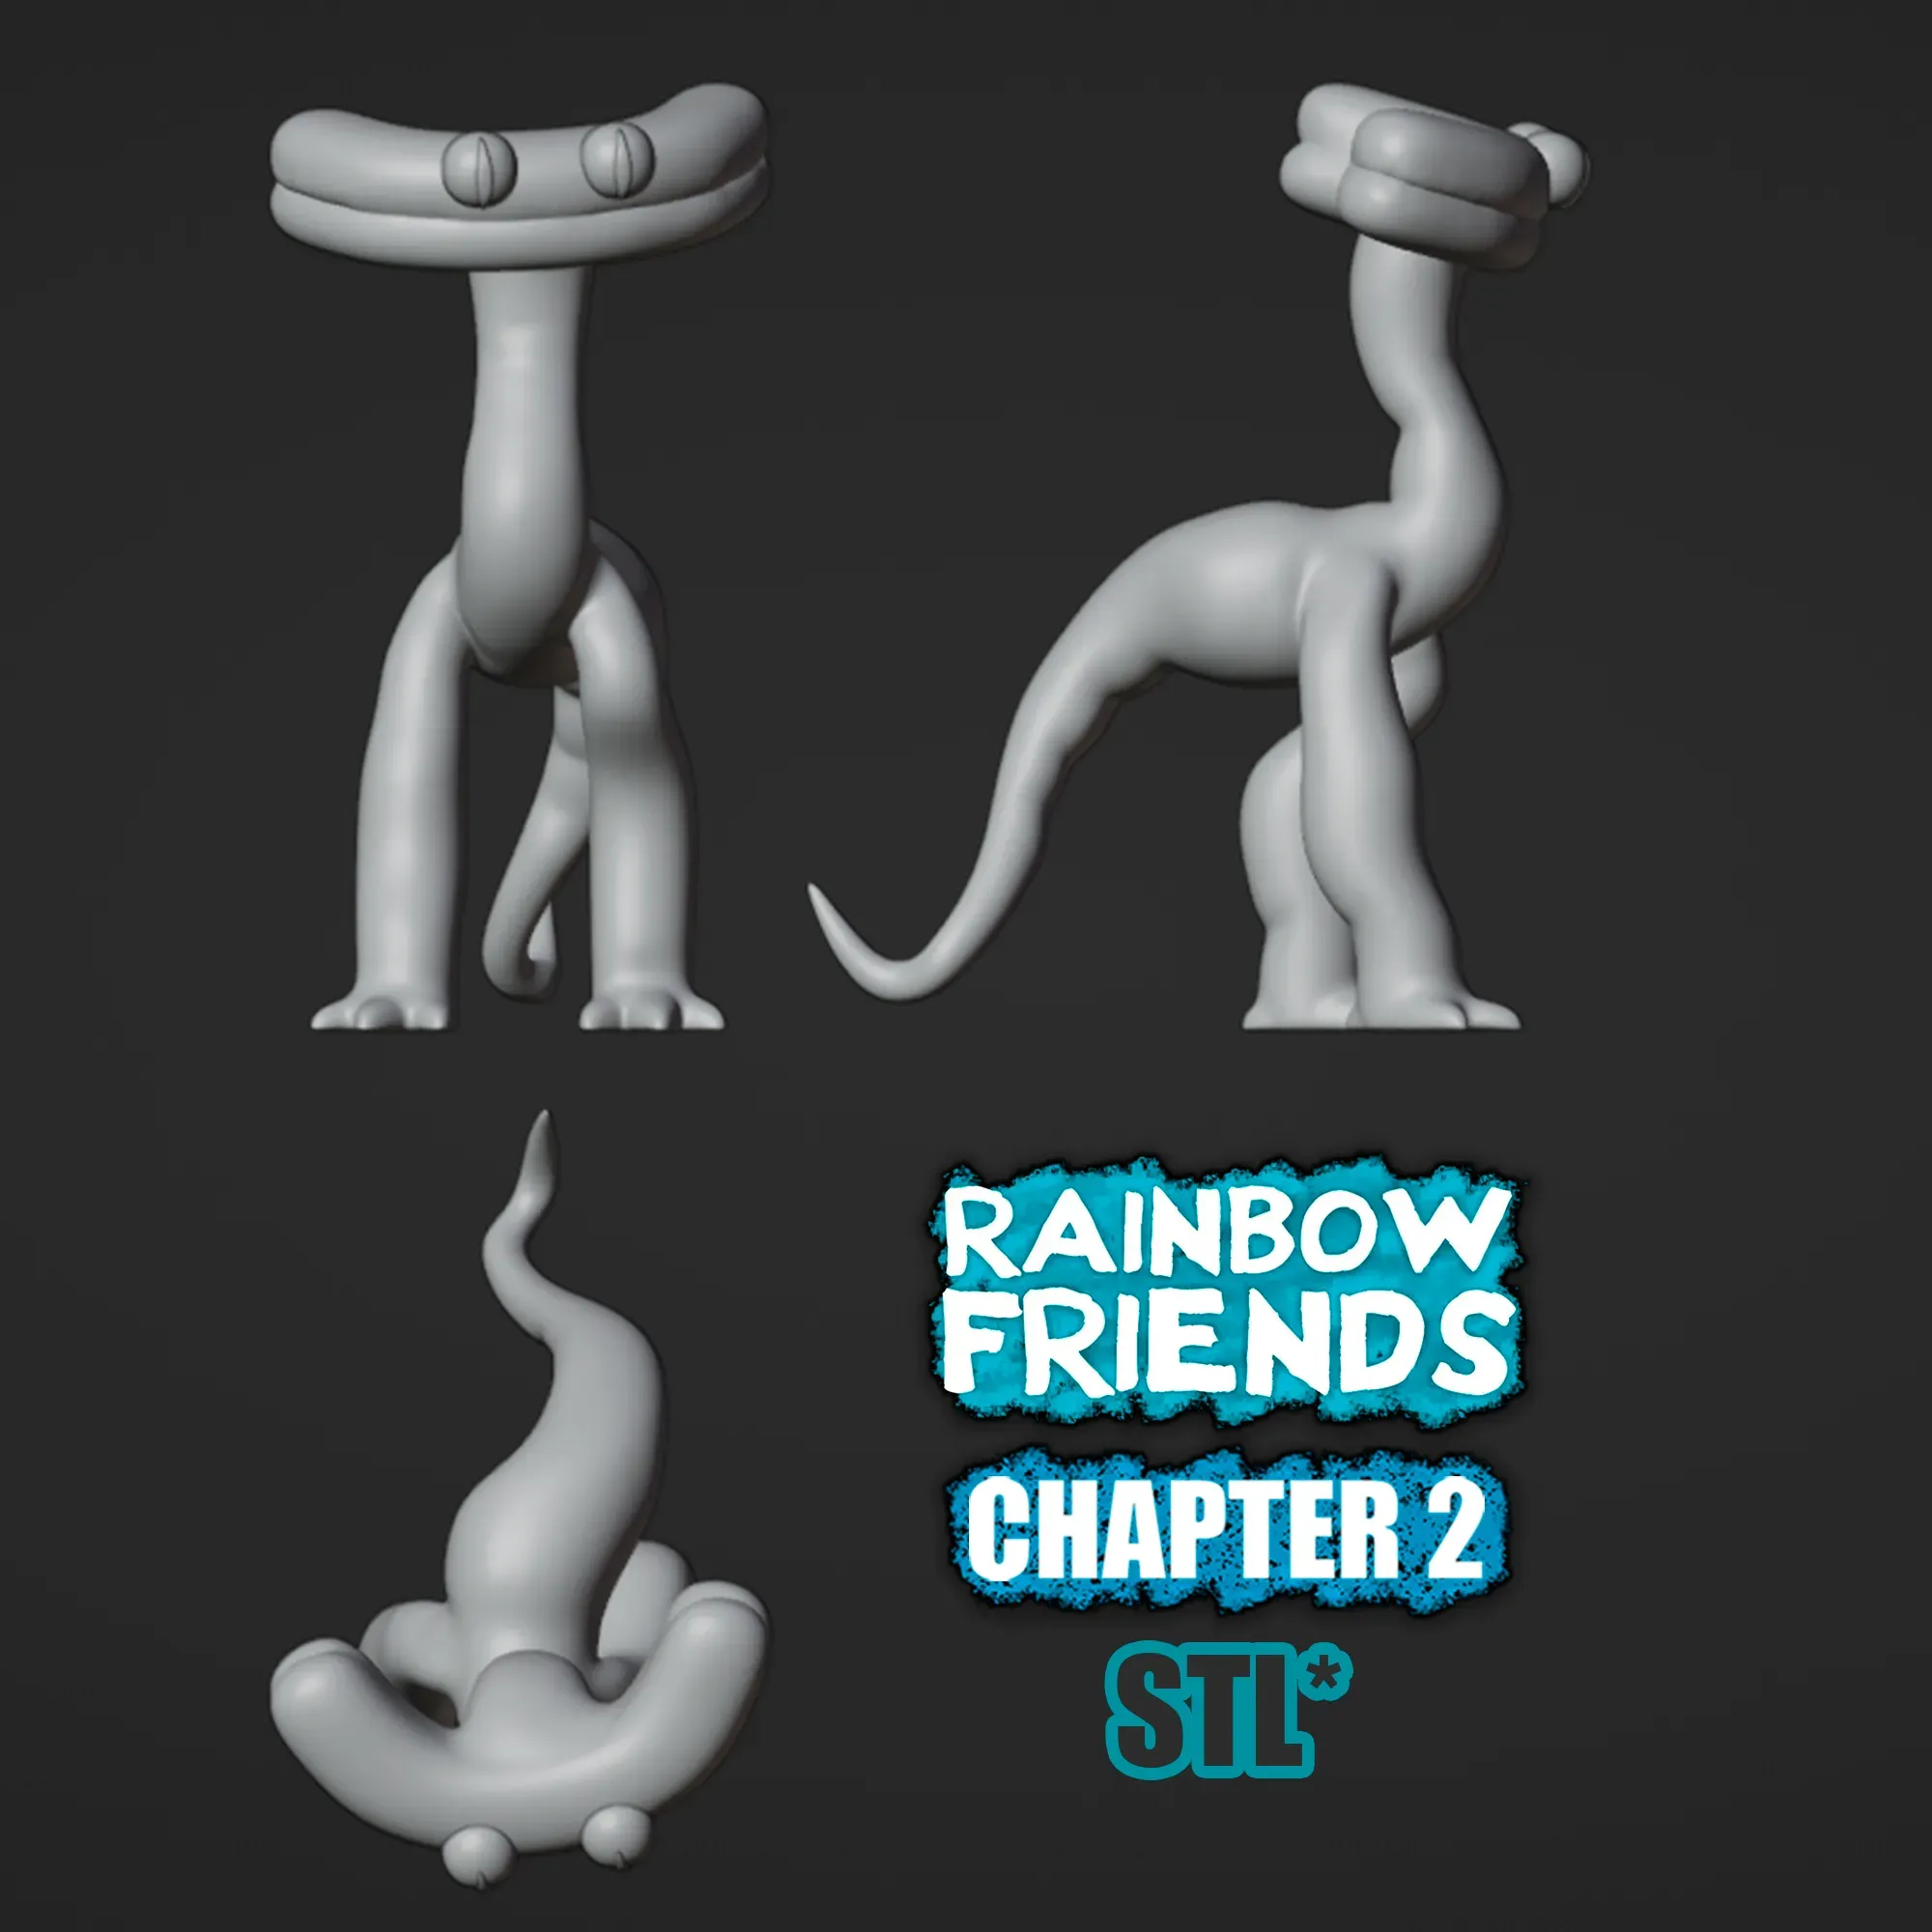 Cyan - Rainbow Friends: Chapter 2